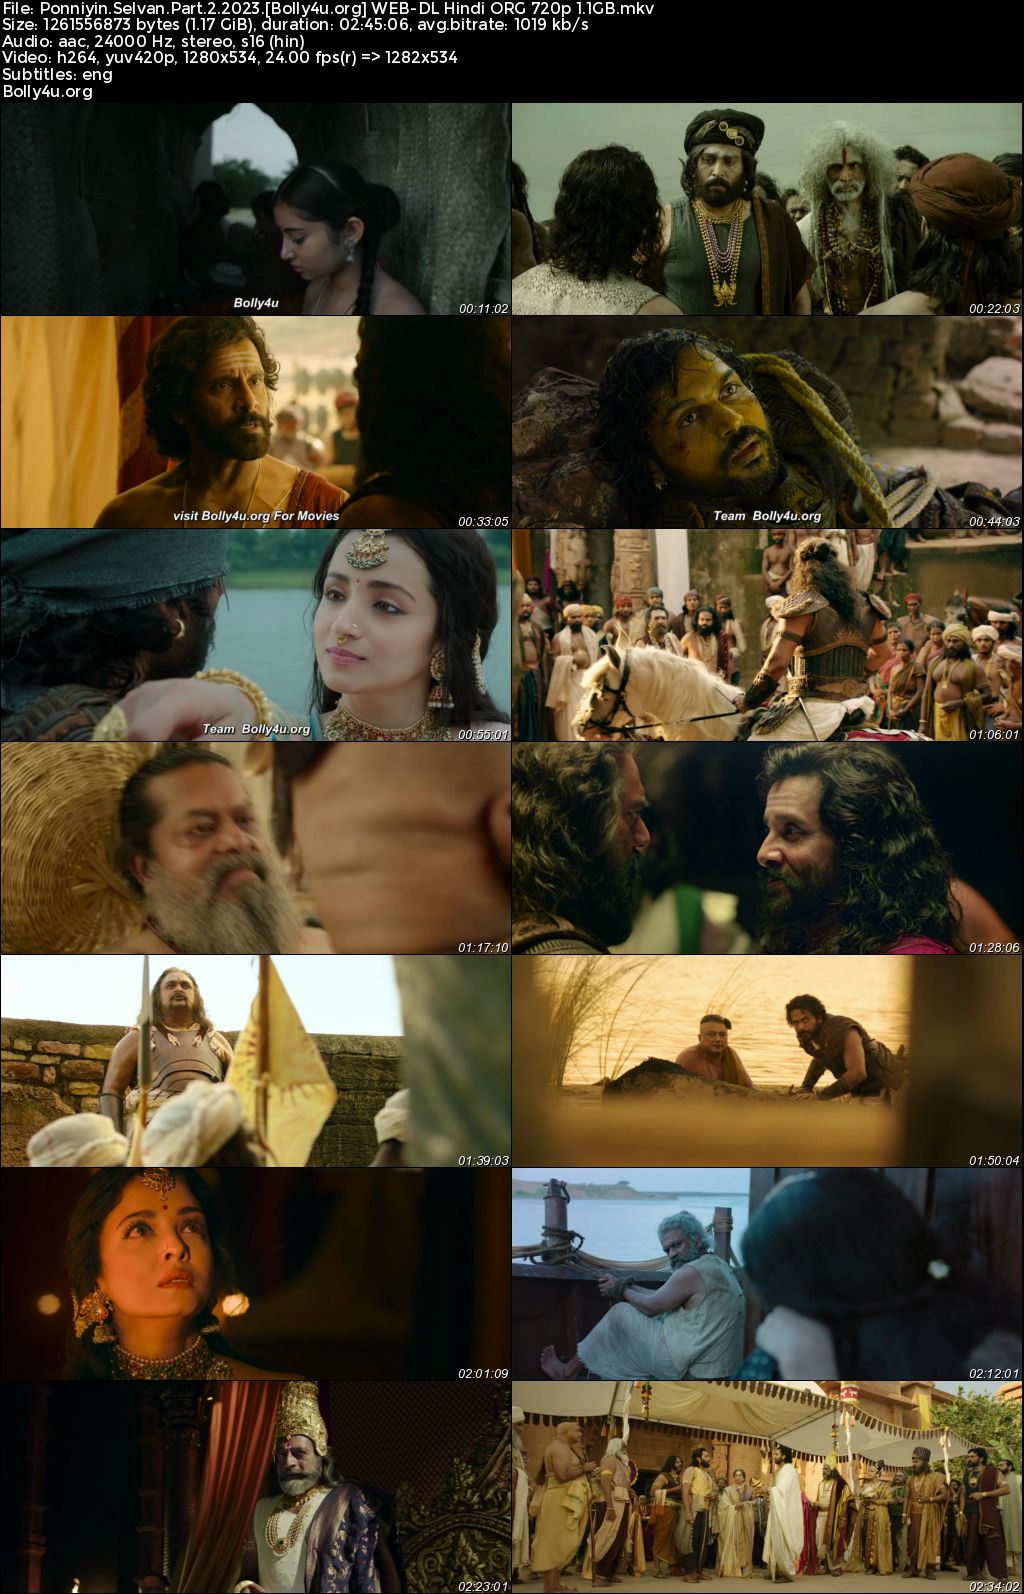 Ponniyin Selvan Part 2 2023 WEB-DL Hindi ORG Full Movie Download 1080p 720p 480p